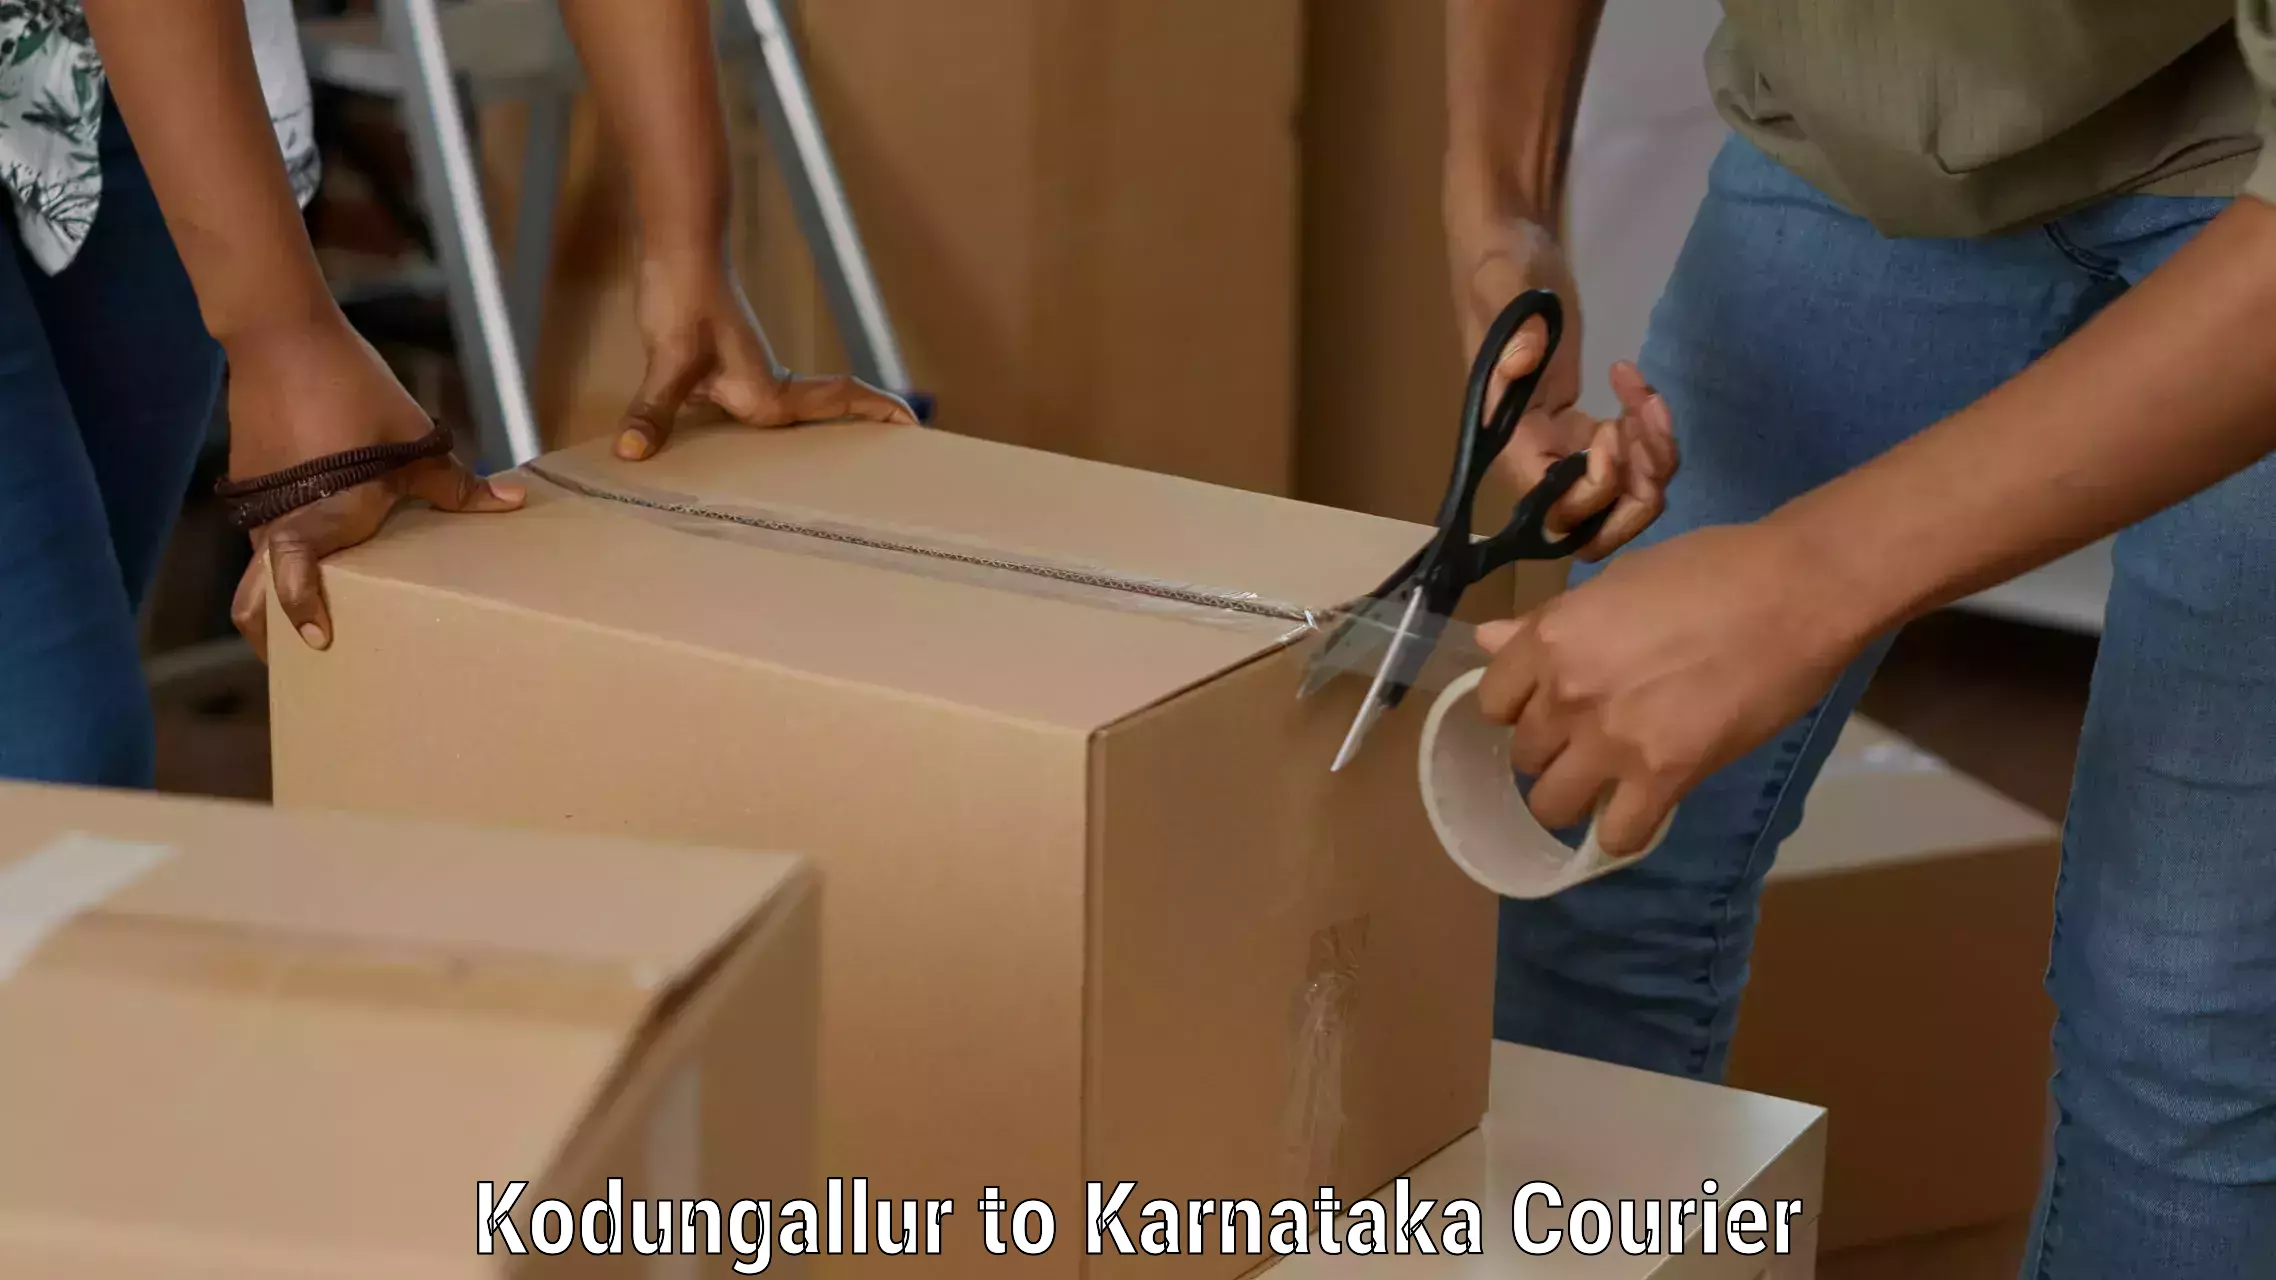 Global logistics network Kodungallur to Savanur